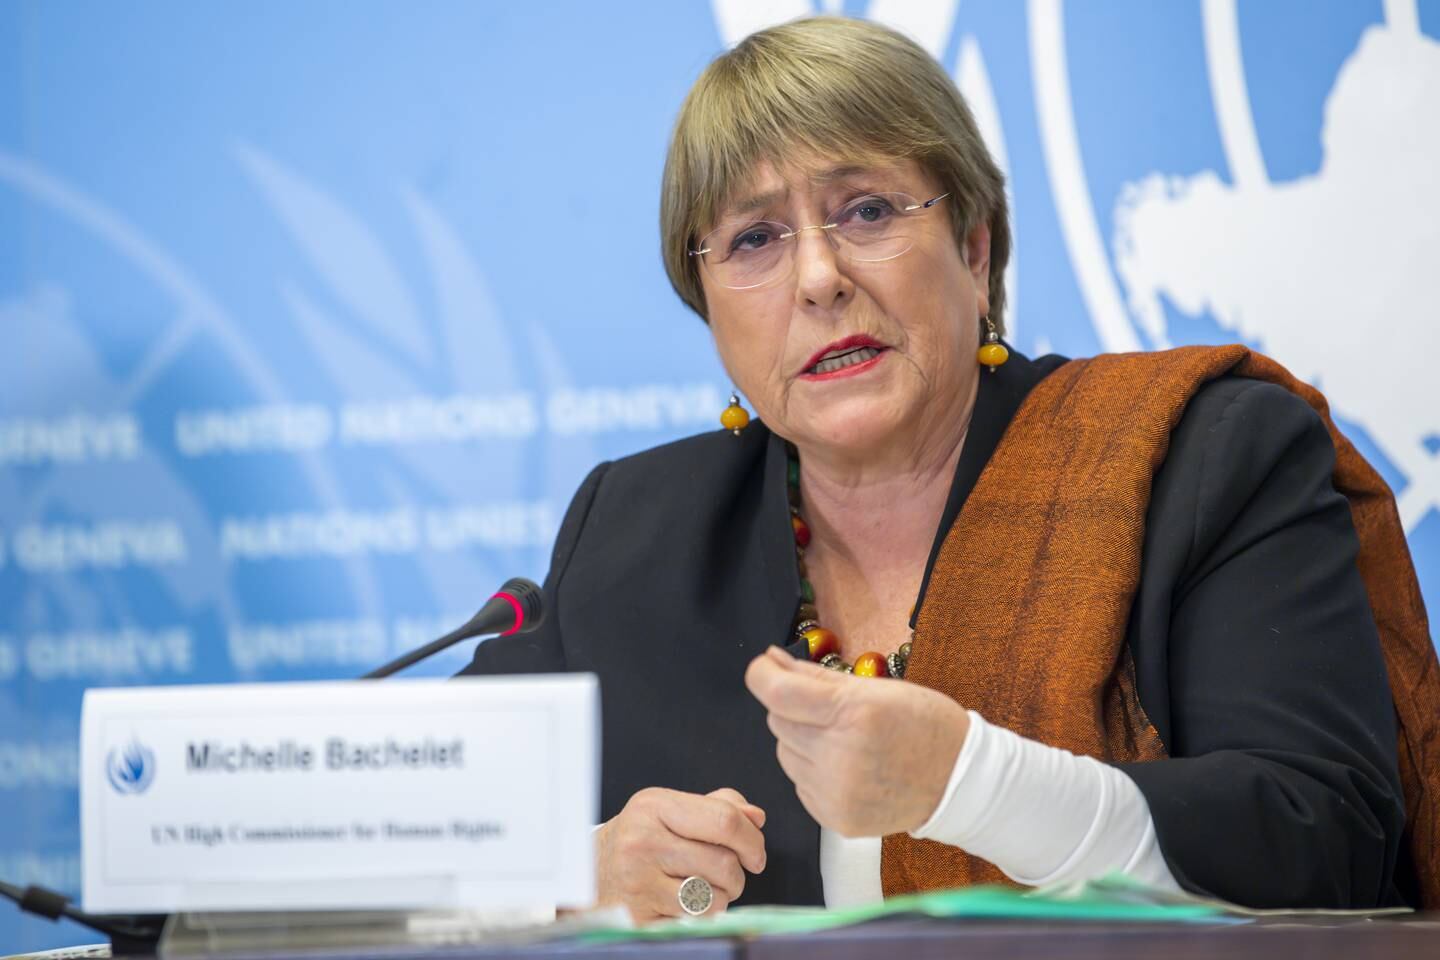 Michelle Bachelet Ukraine